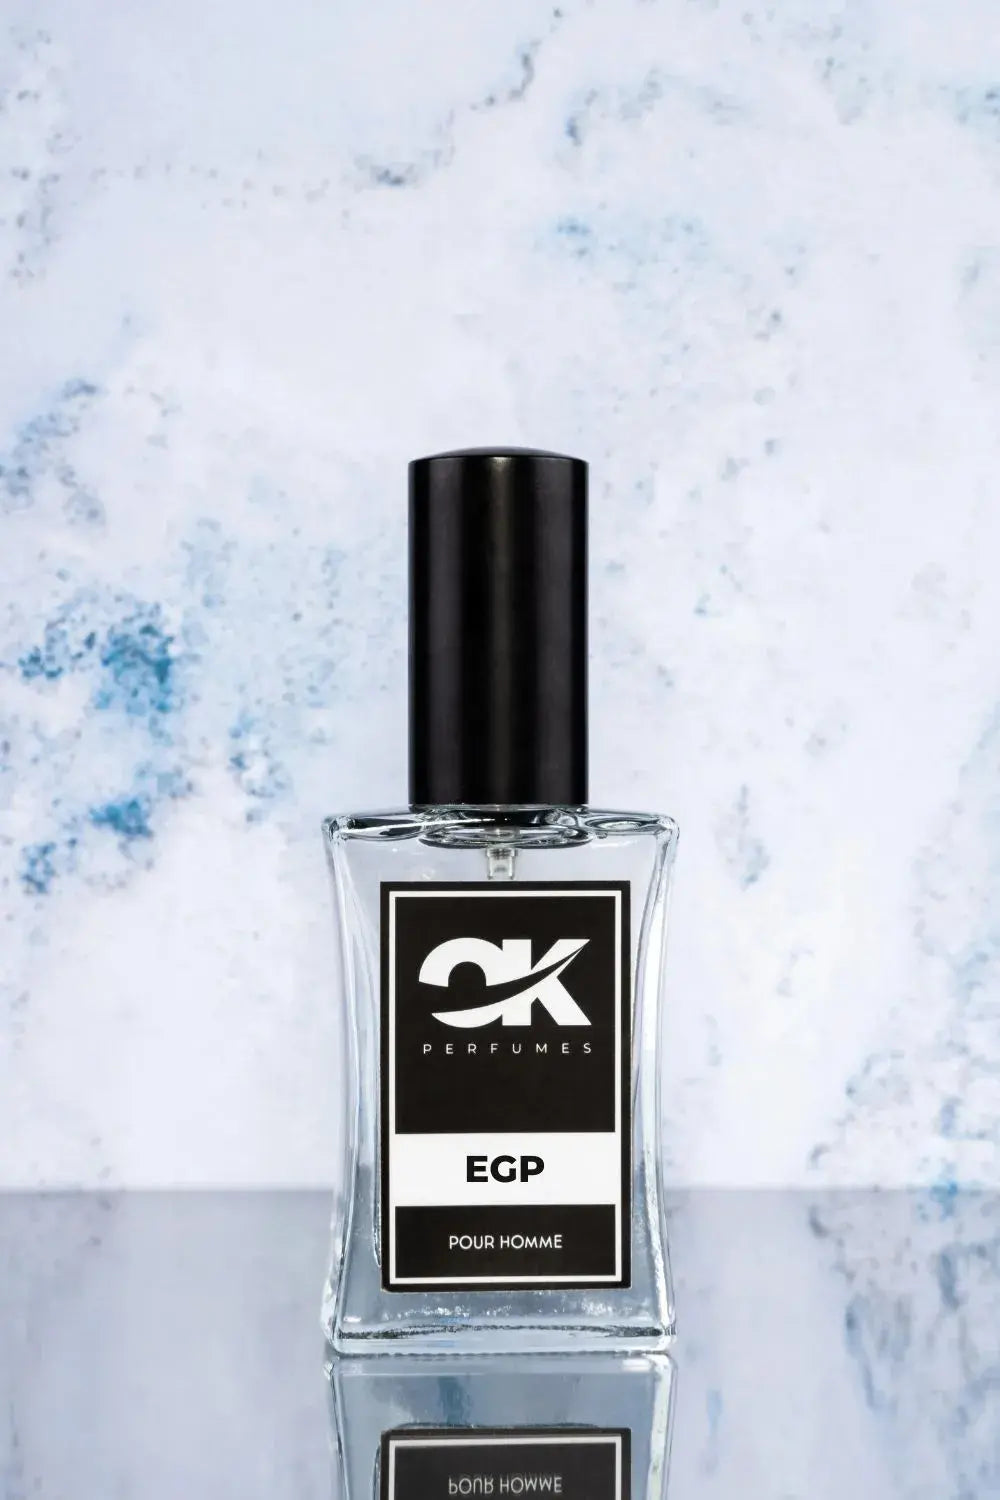 EGP - Recuerda a Egoiste Platinum de Chanel